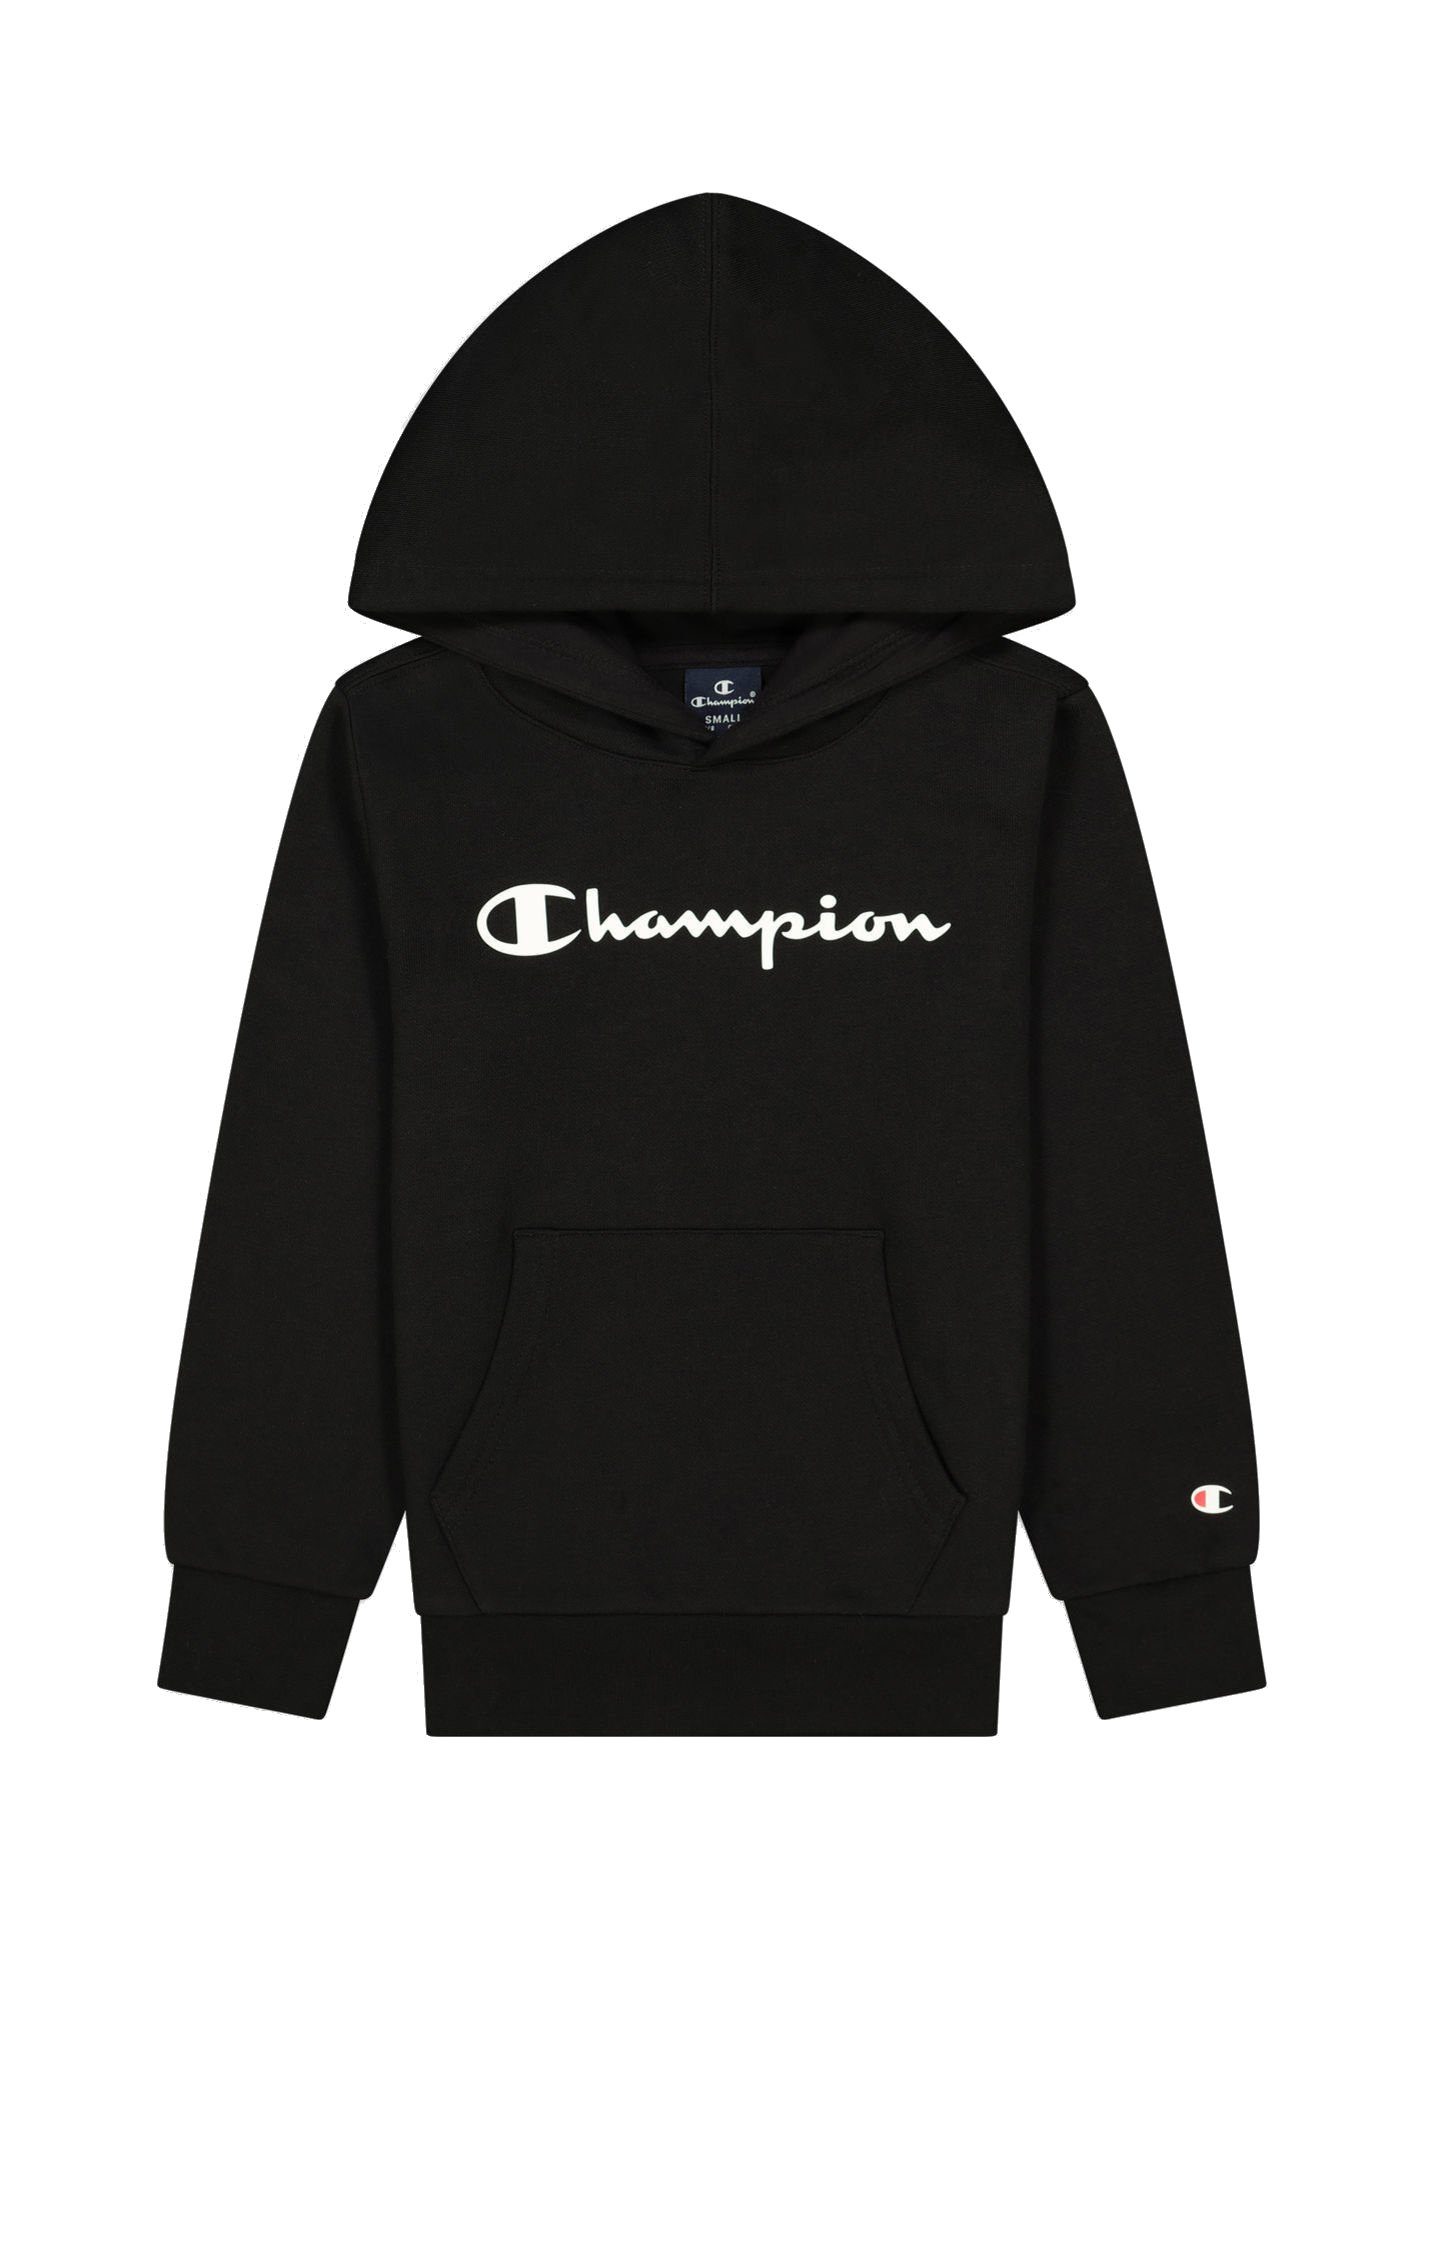 Champion Hoodie Champion Kinder Kapuzenpullover Hooded Sweatshirt 305358 schwarz (nbk) | Sweatshirts